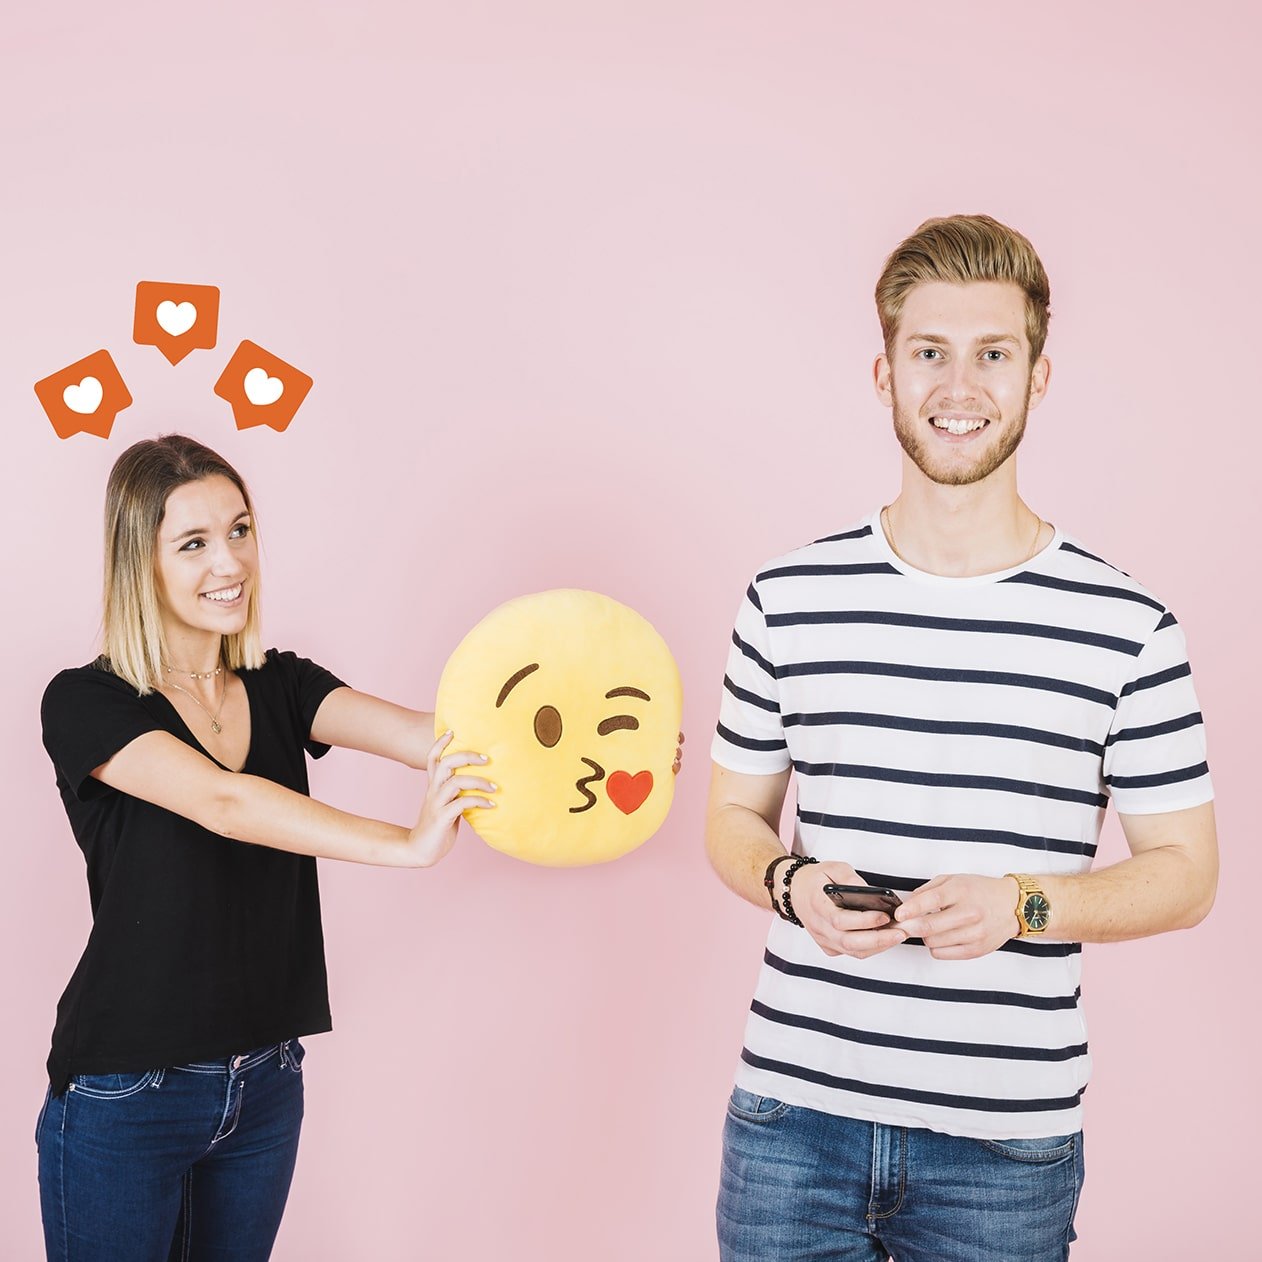 love-icons-happy-woman-holding-kiss-emoji-near-her-boyfriend-min